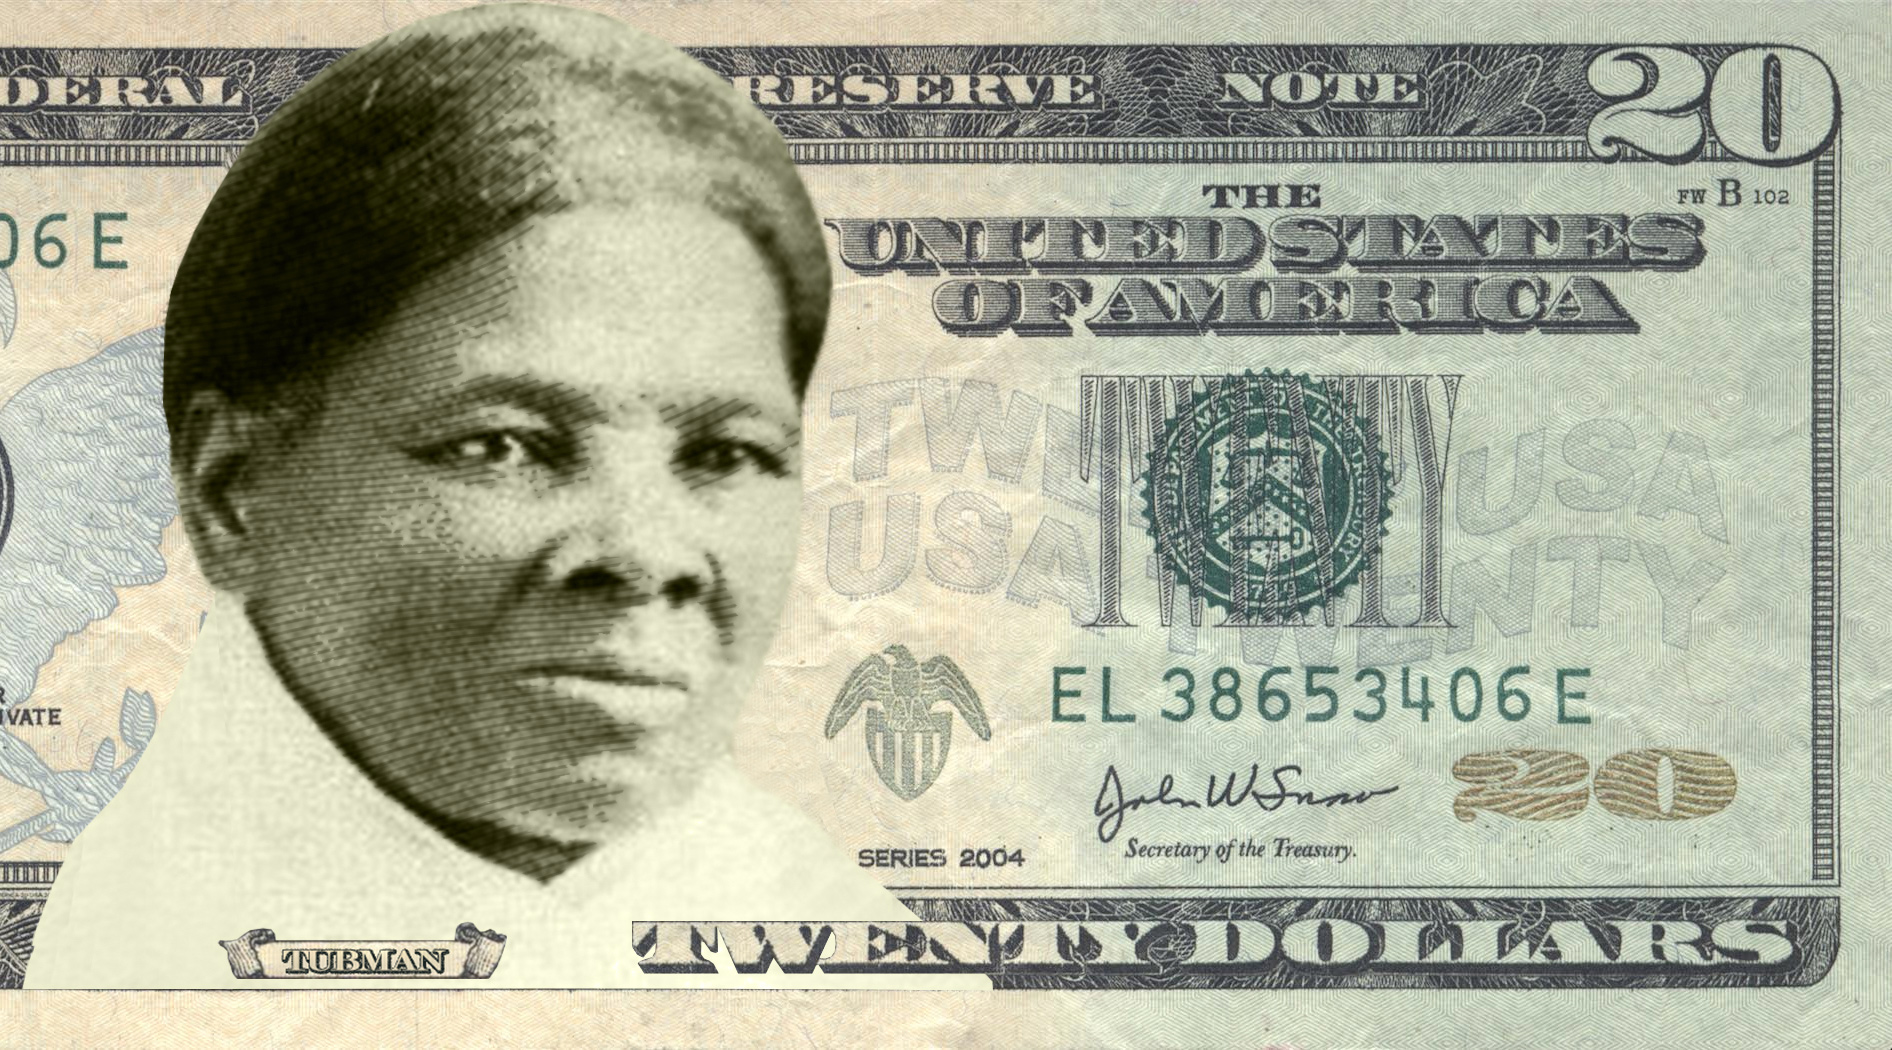 Harriet Tubman’s Methodist & PA connections